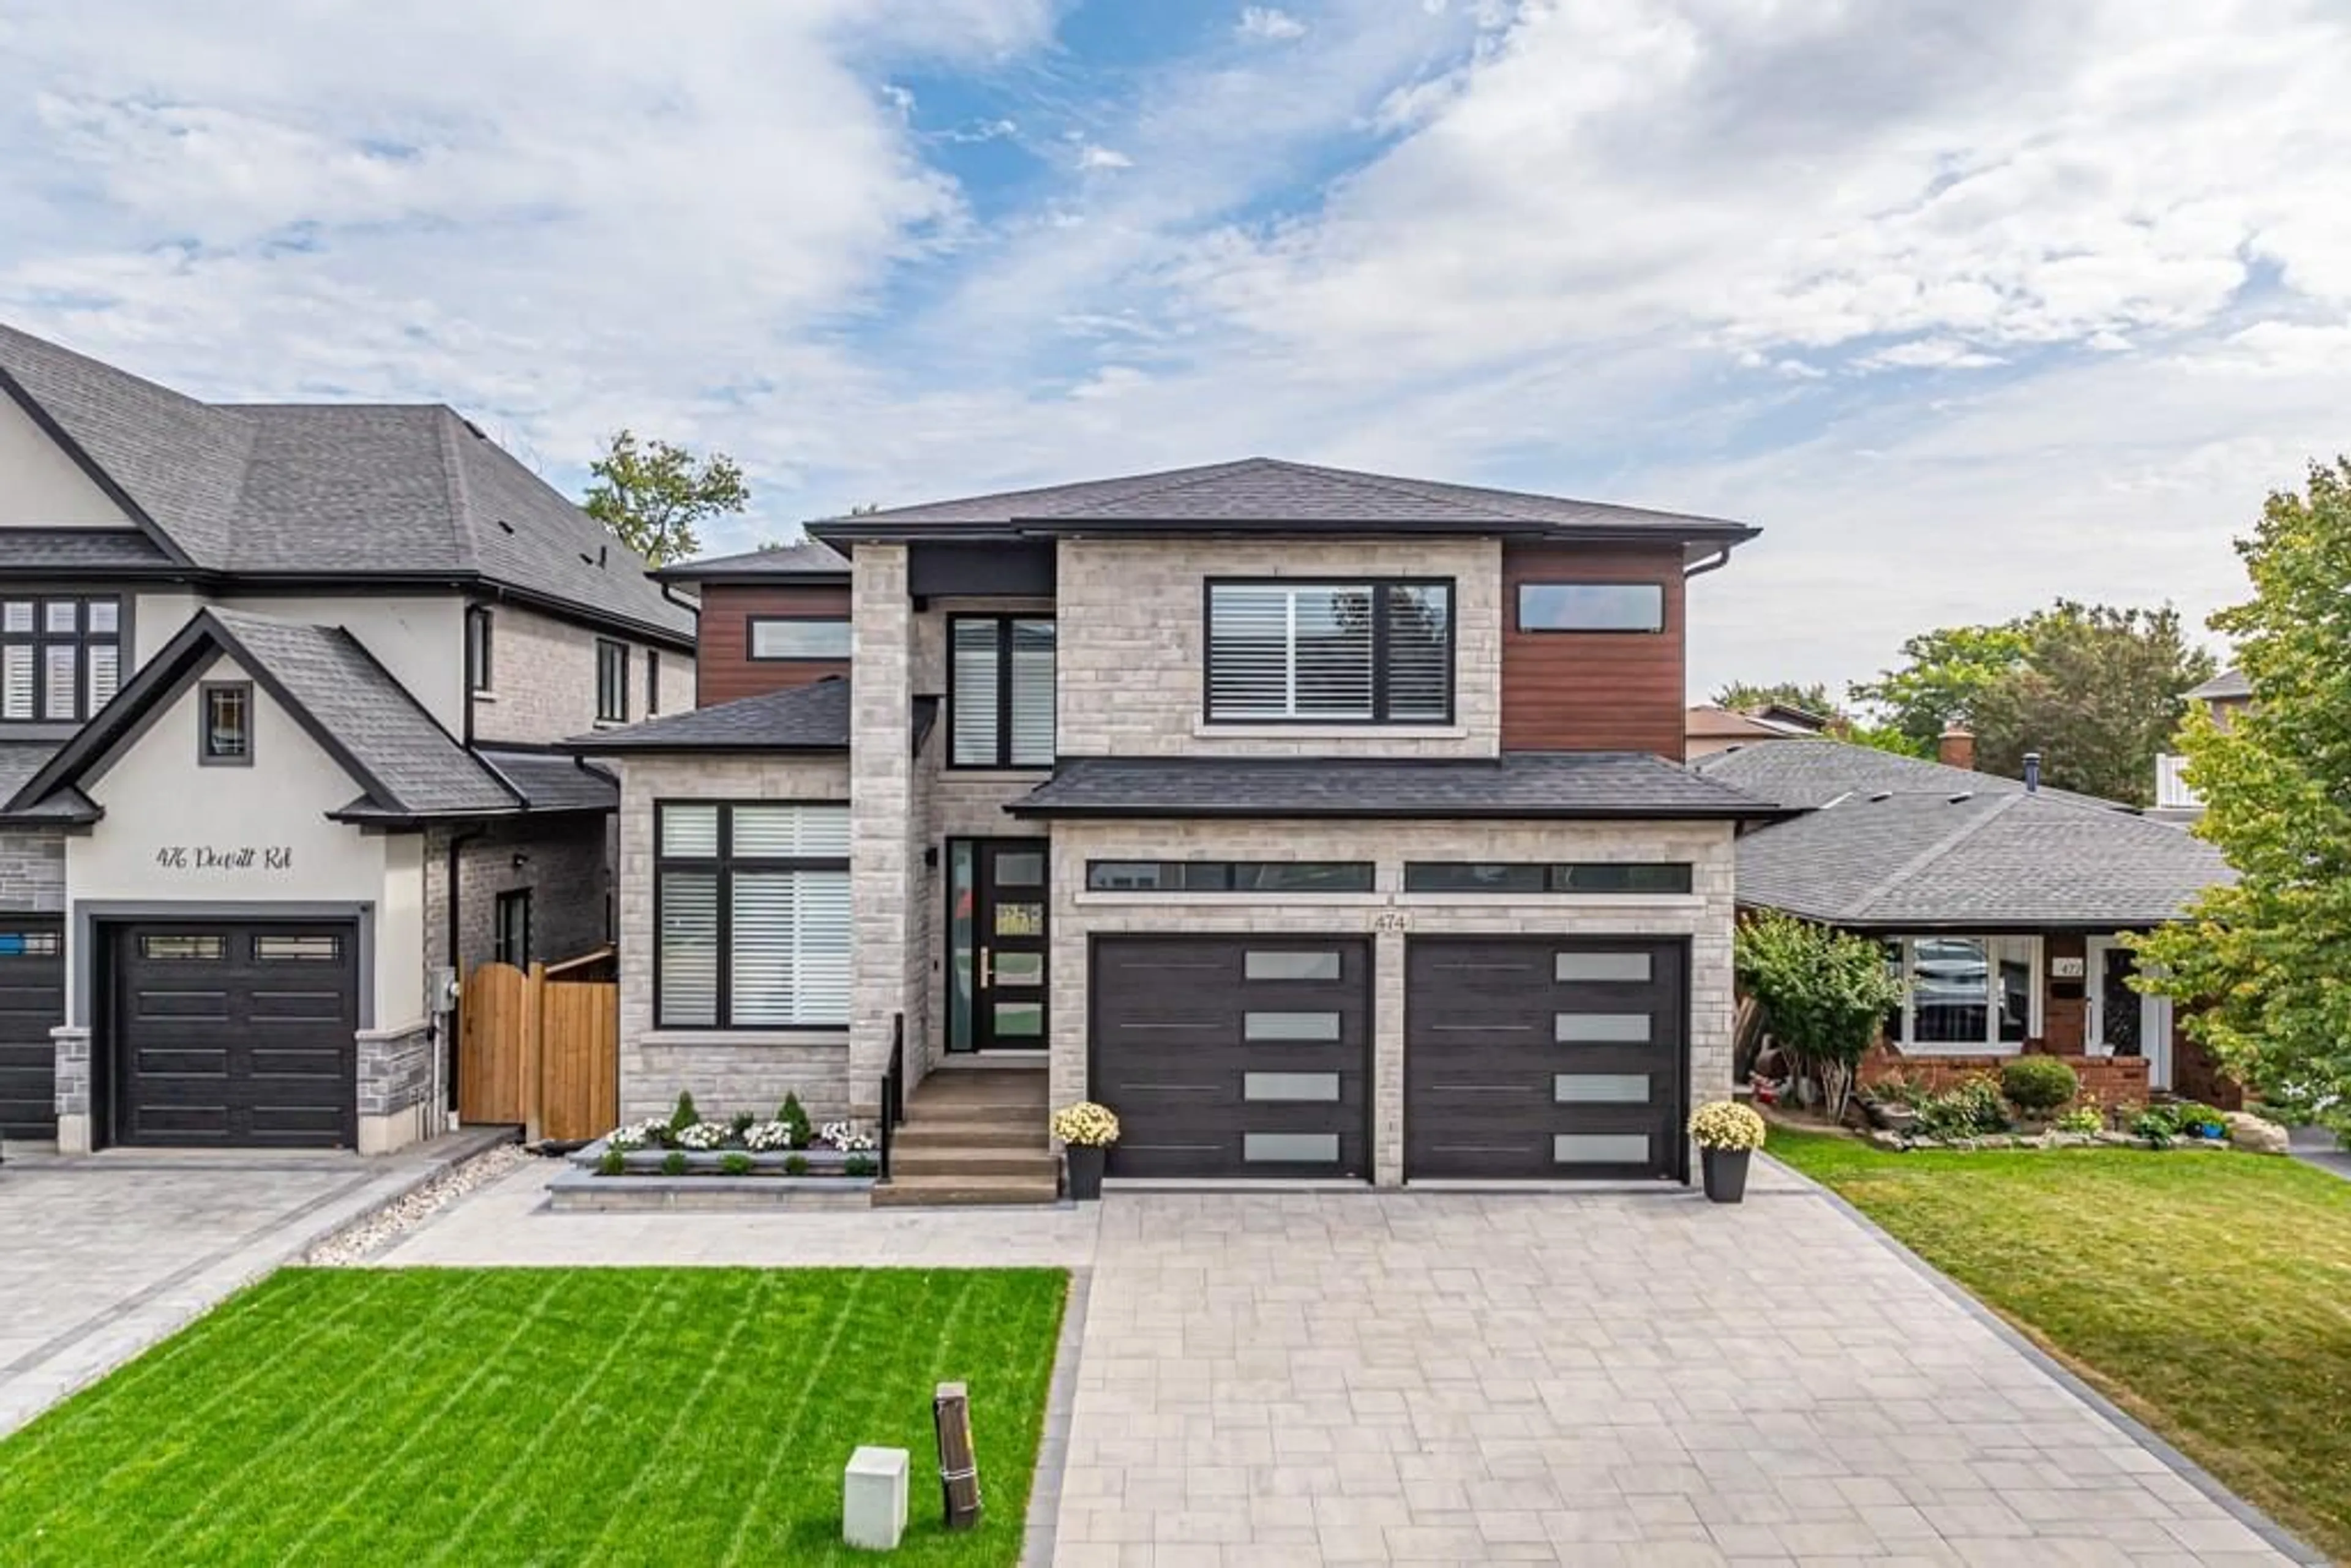 Home with brick exterior material for 474 Dewitt Rd, Stoney Creek Ontario L8E 5A5